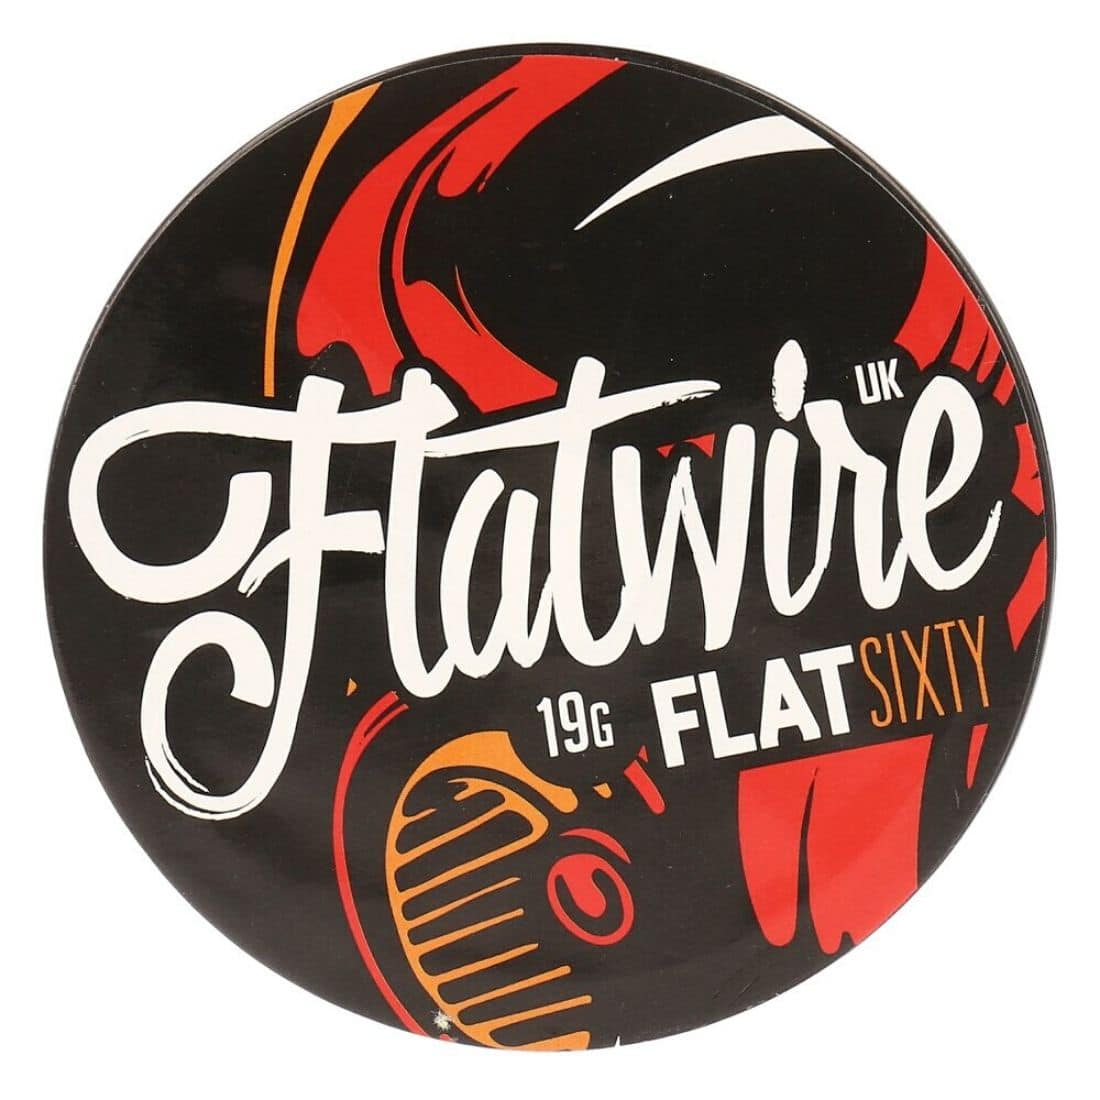 Flatwire UK Flapton